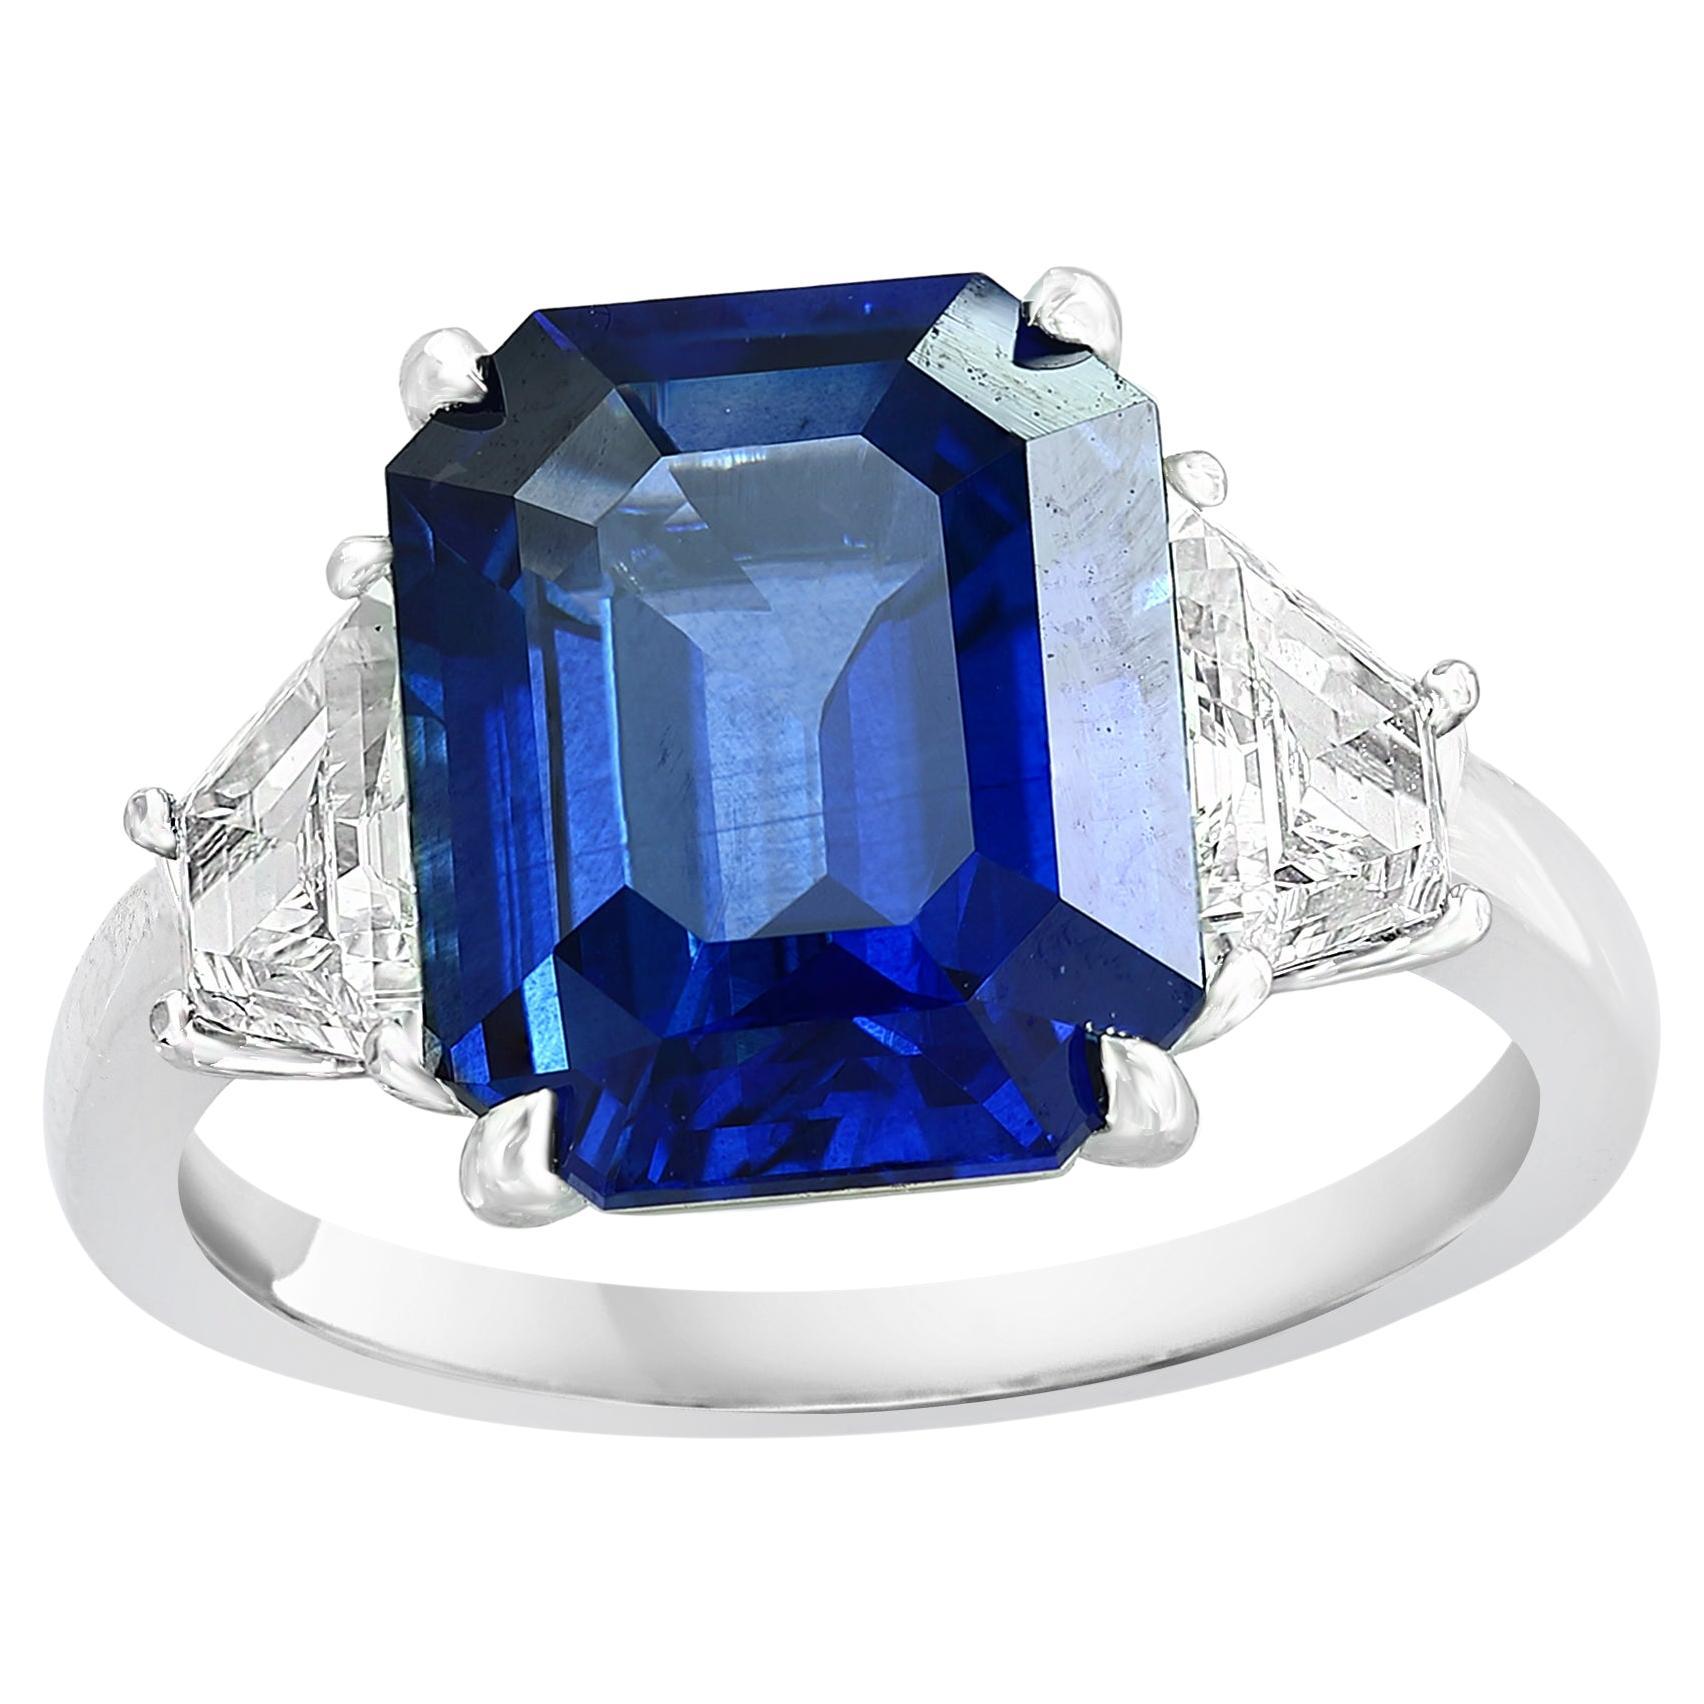 Certified 6.21 Carat Emerald Cut Sapphire & Diamond Engagement Ring in Platinum